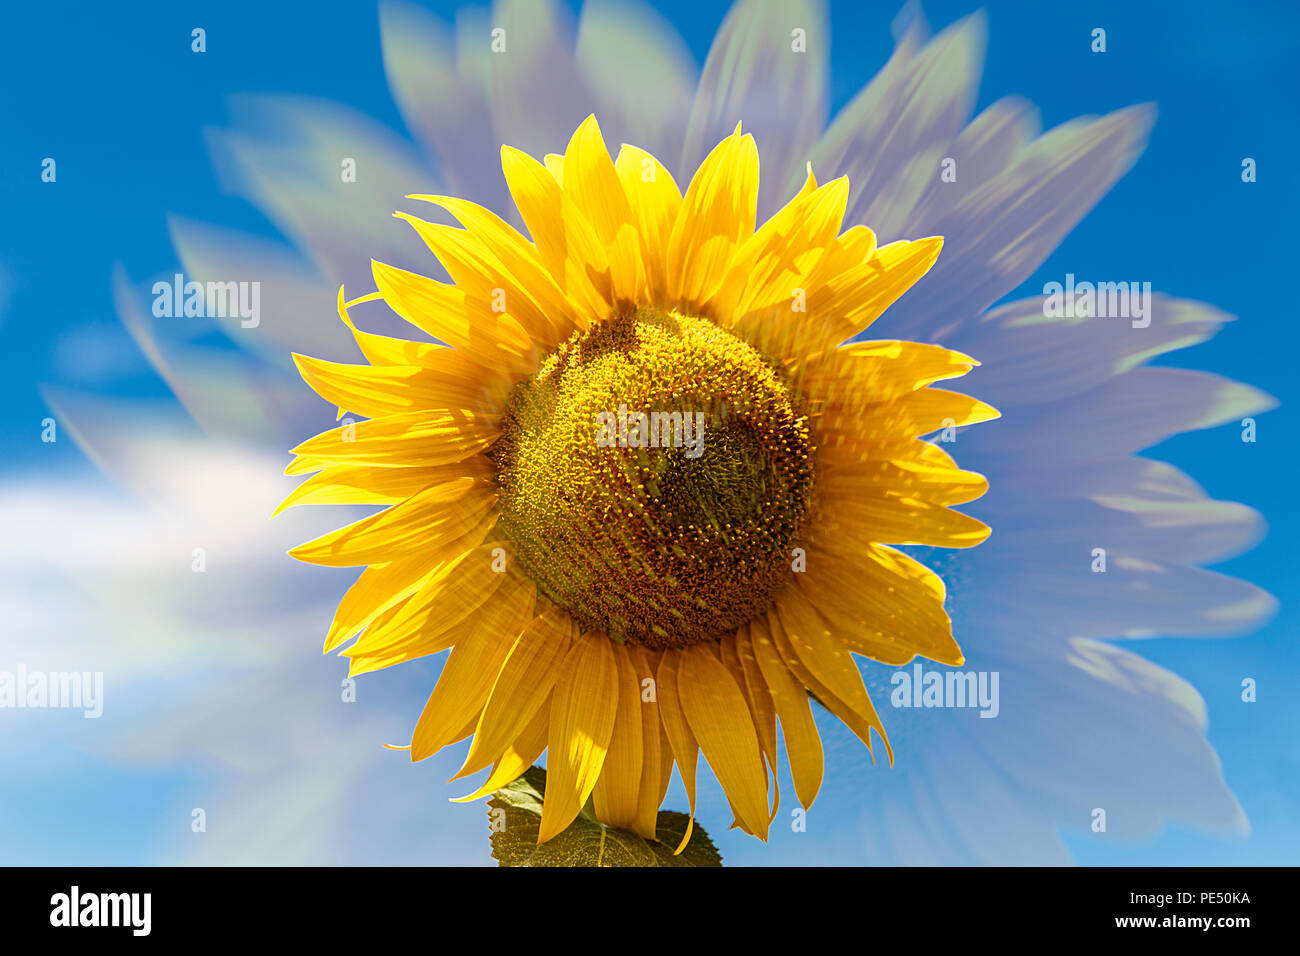 the sunflower Stock Photo